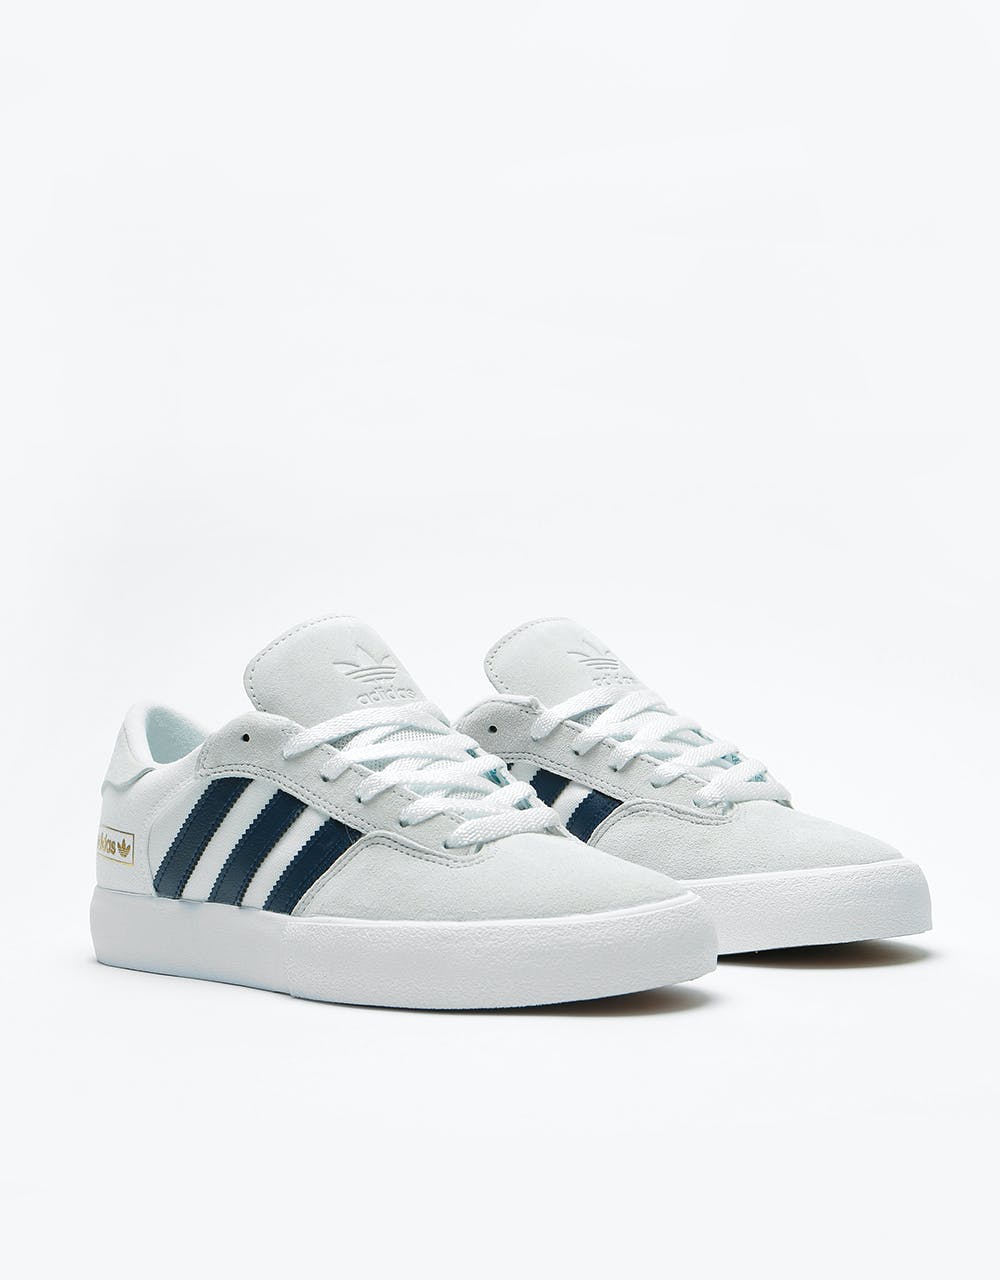 Adidas Matchbreak Super Skate Shoes - Crystal White/Collegiate Navy/Wh